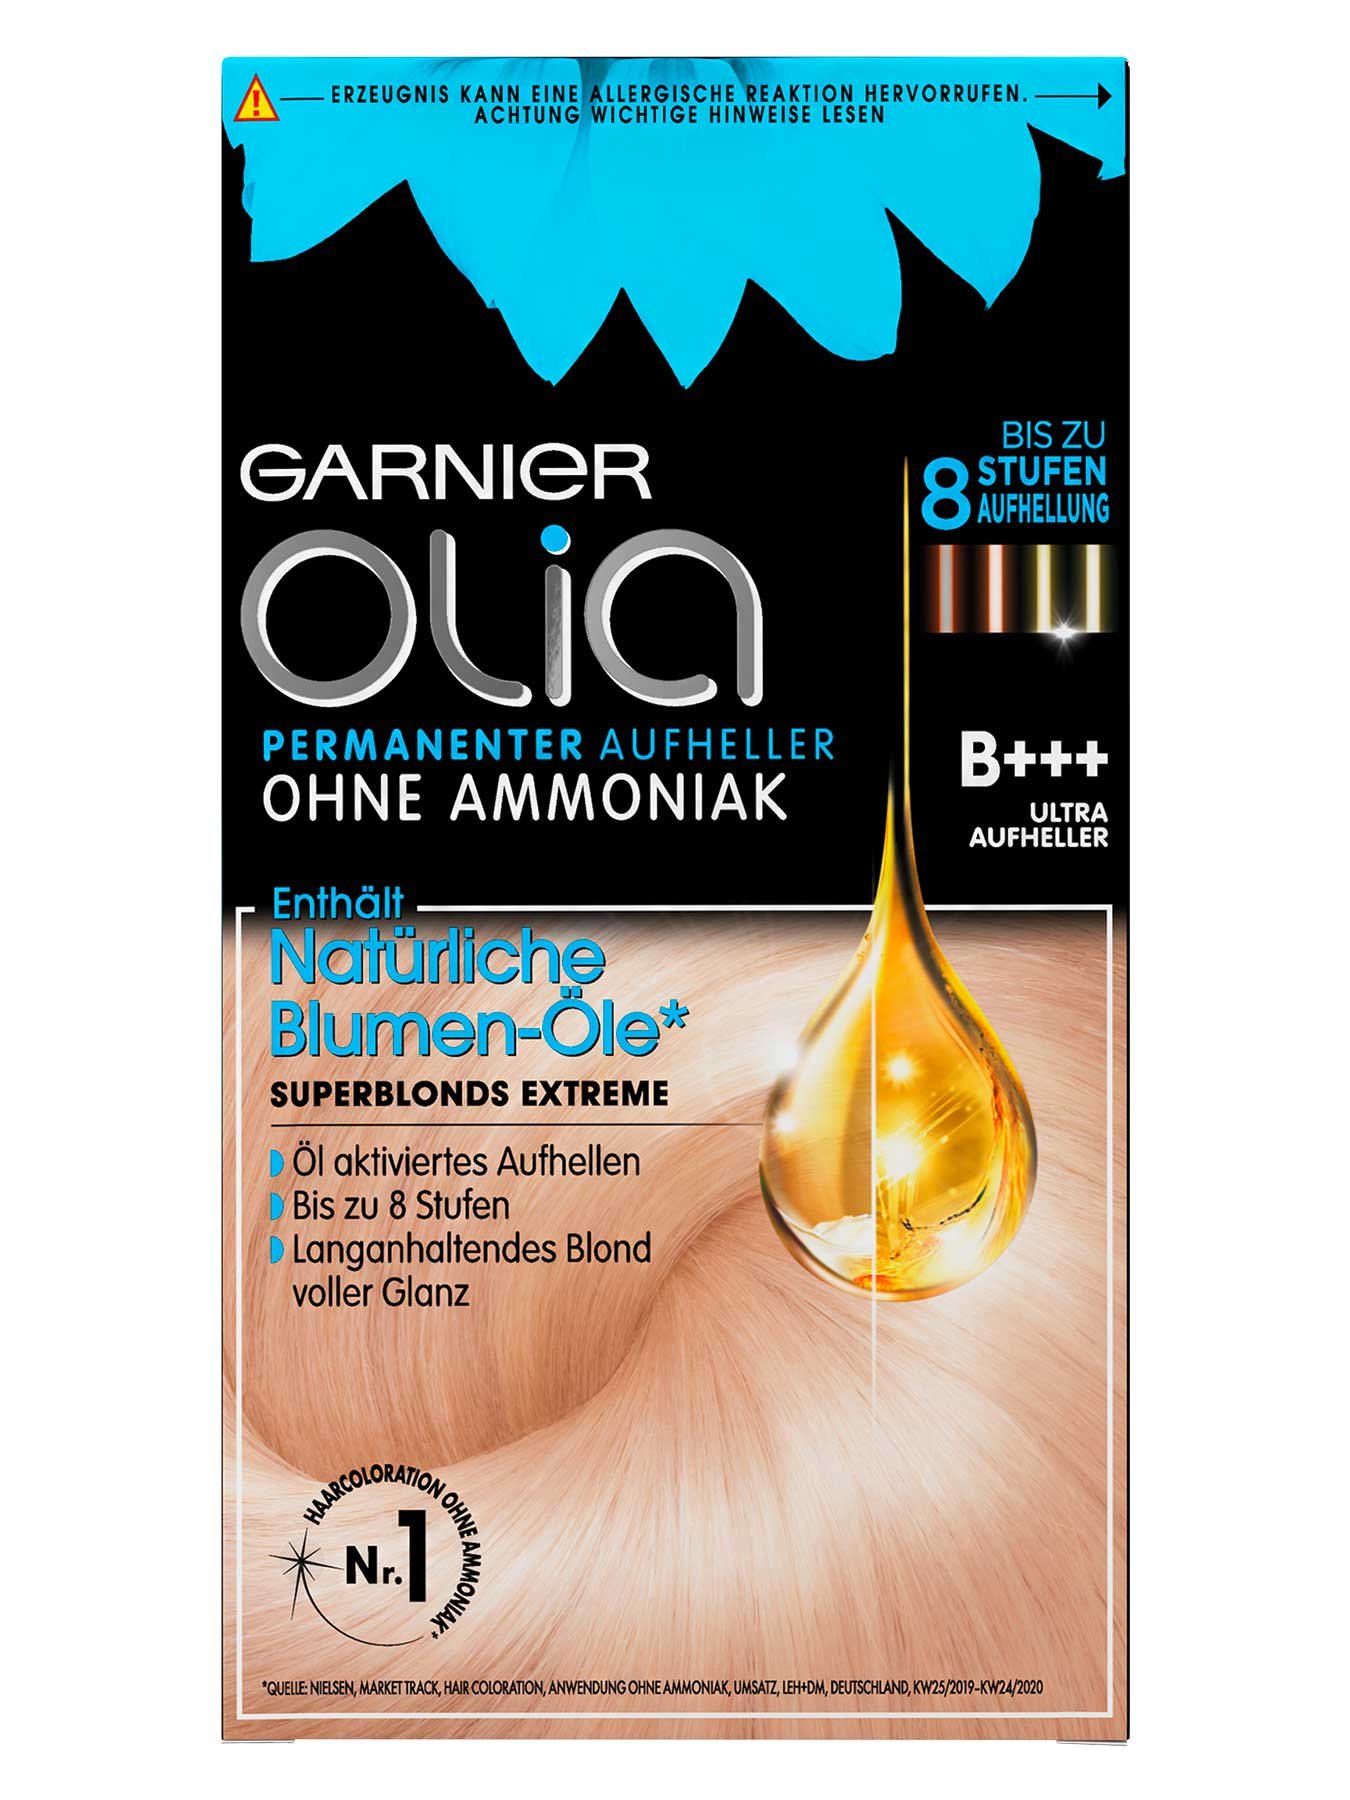 Aufheller B+++ Ultra hellt das Haar schonend auf | Garnier